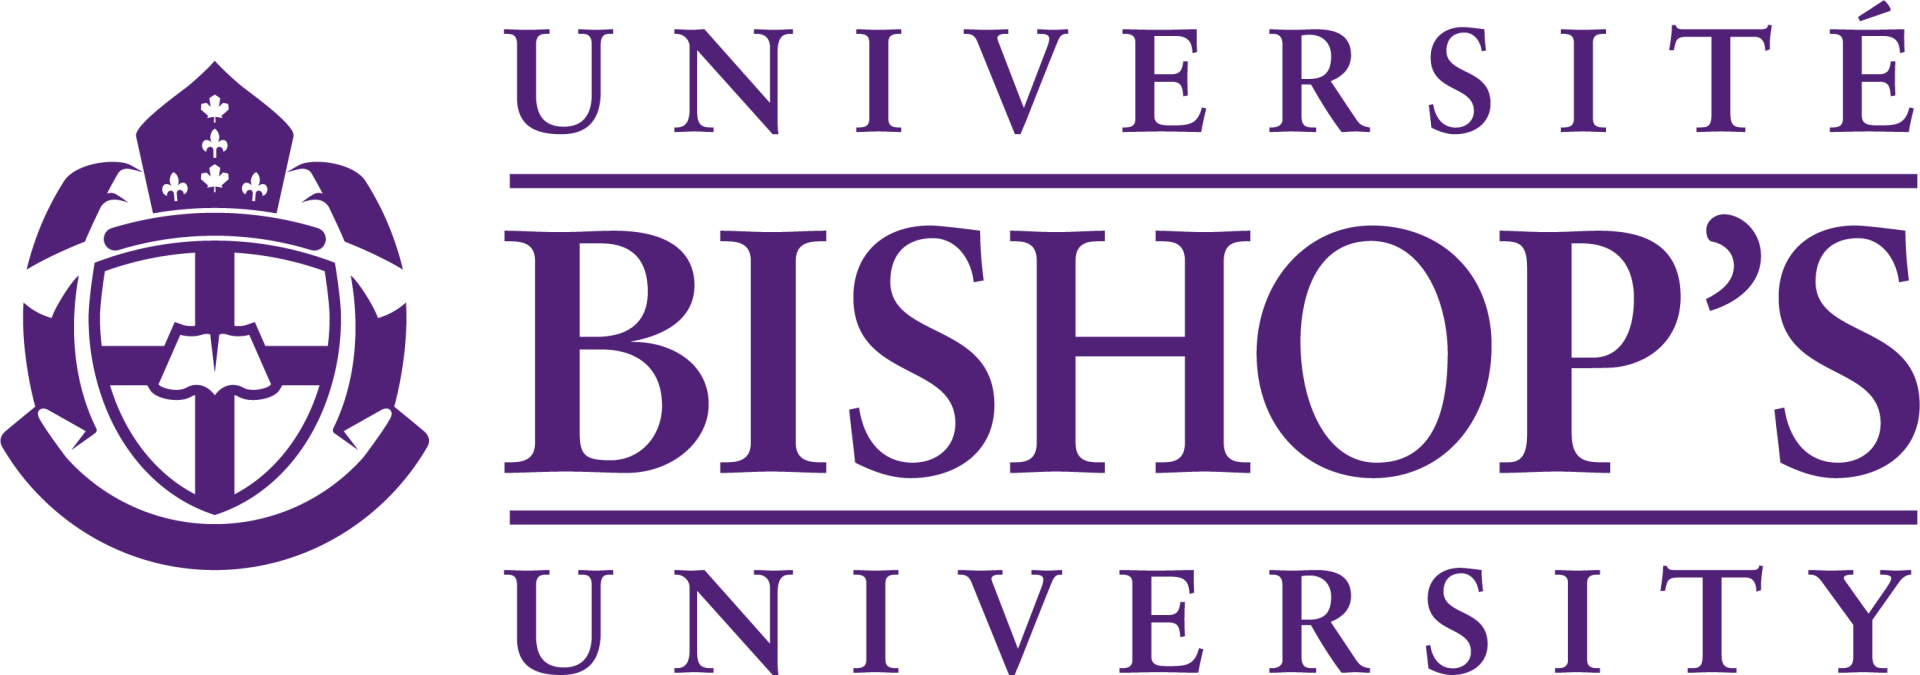 Bishop's University Quebec Canada